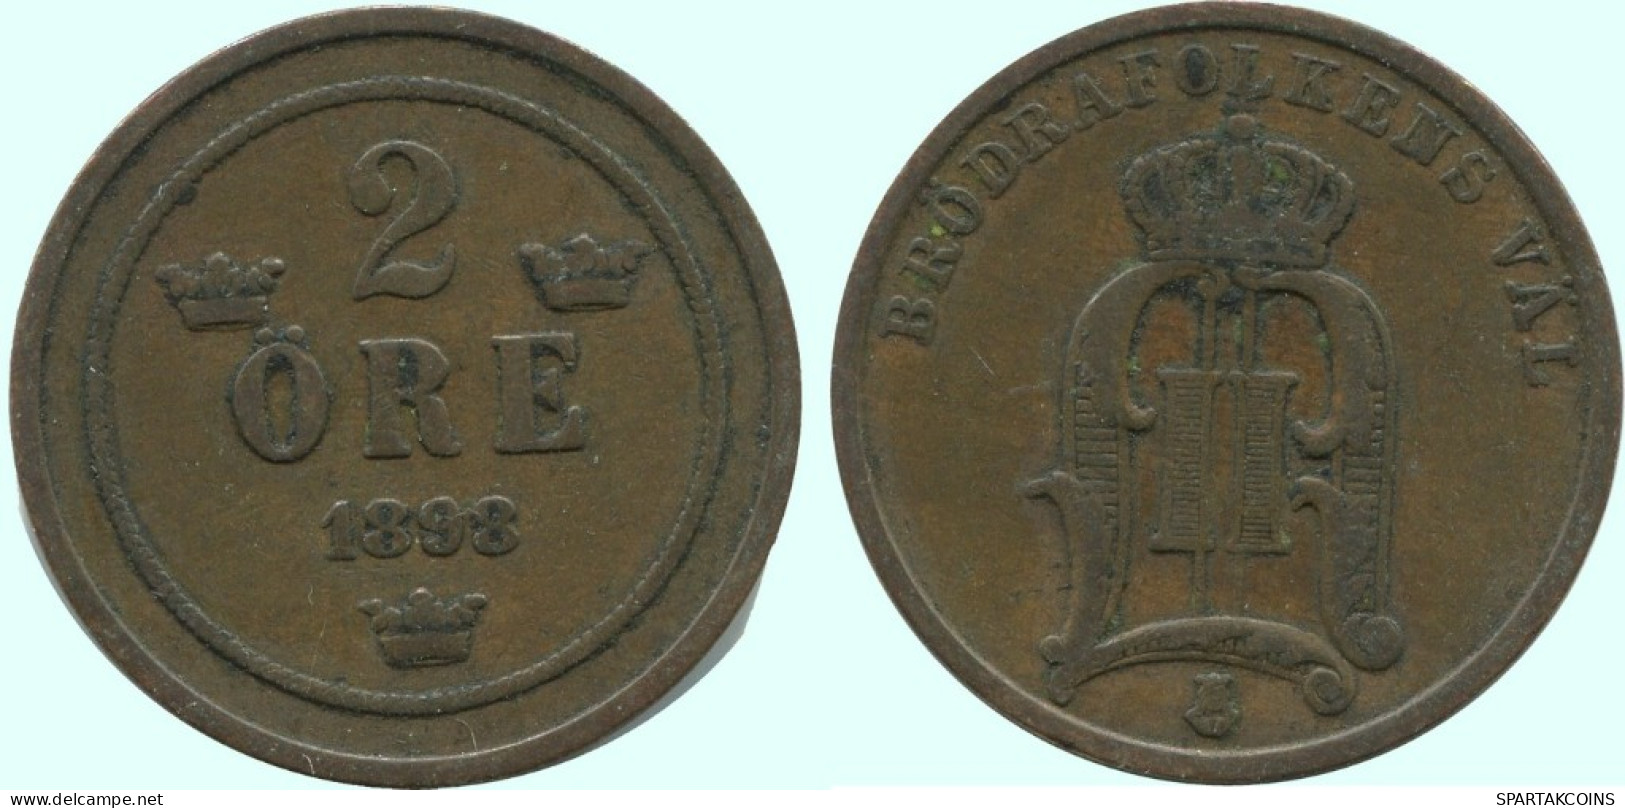 2 ORE 1898 SWEDEN Coin #AC866.2.U.A - Sweden